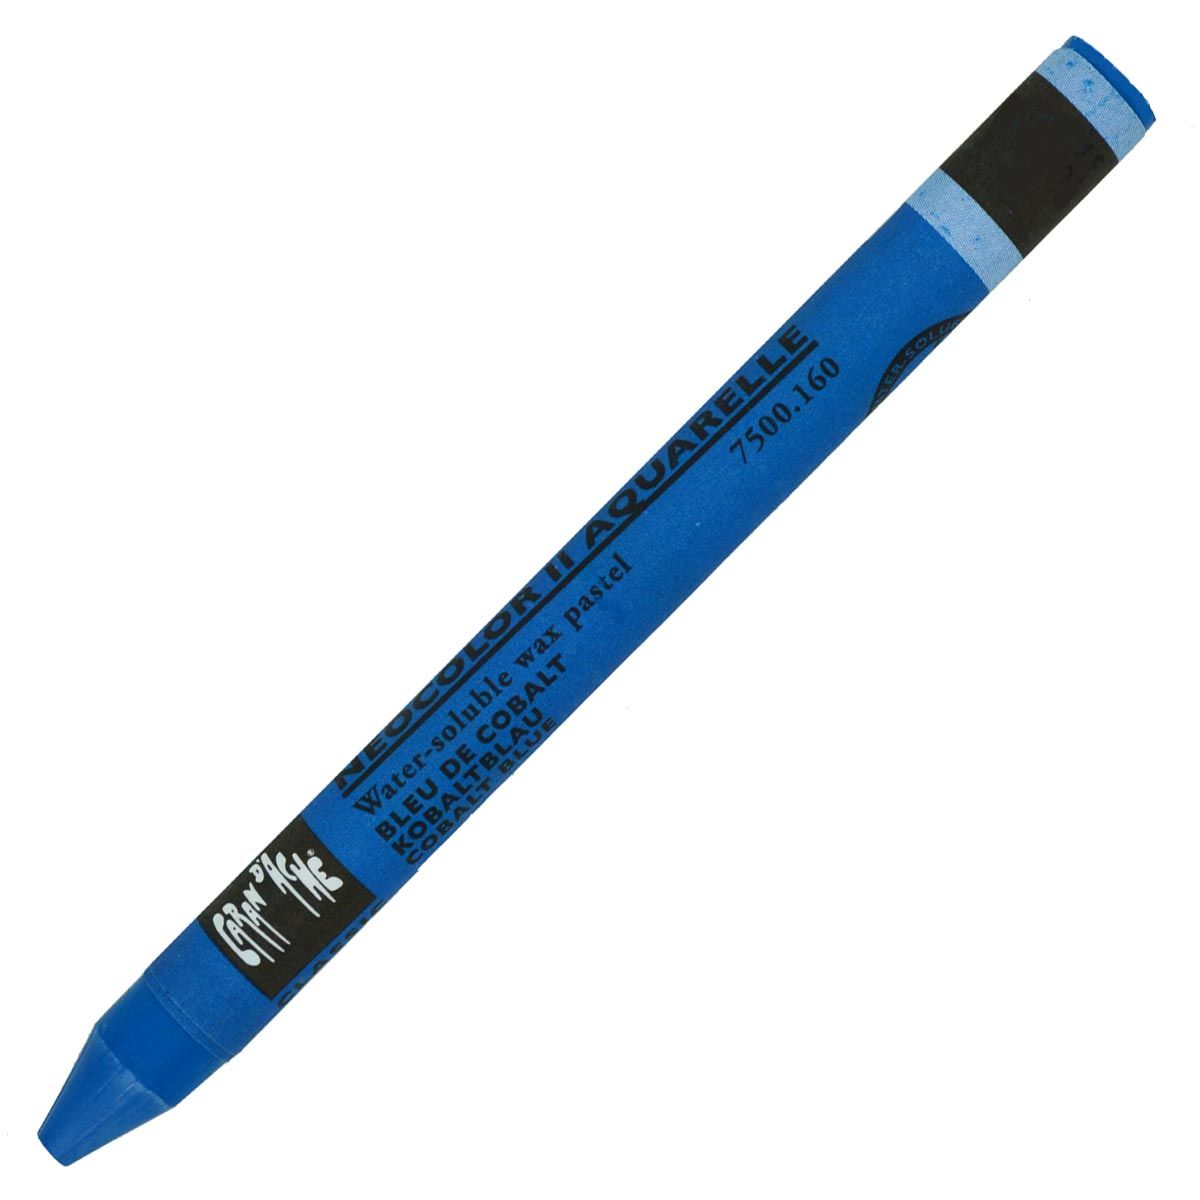 Neocolor II Aquarelle Artists’ Crayon - Cobalt Blue 160